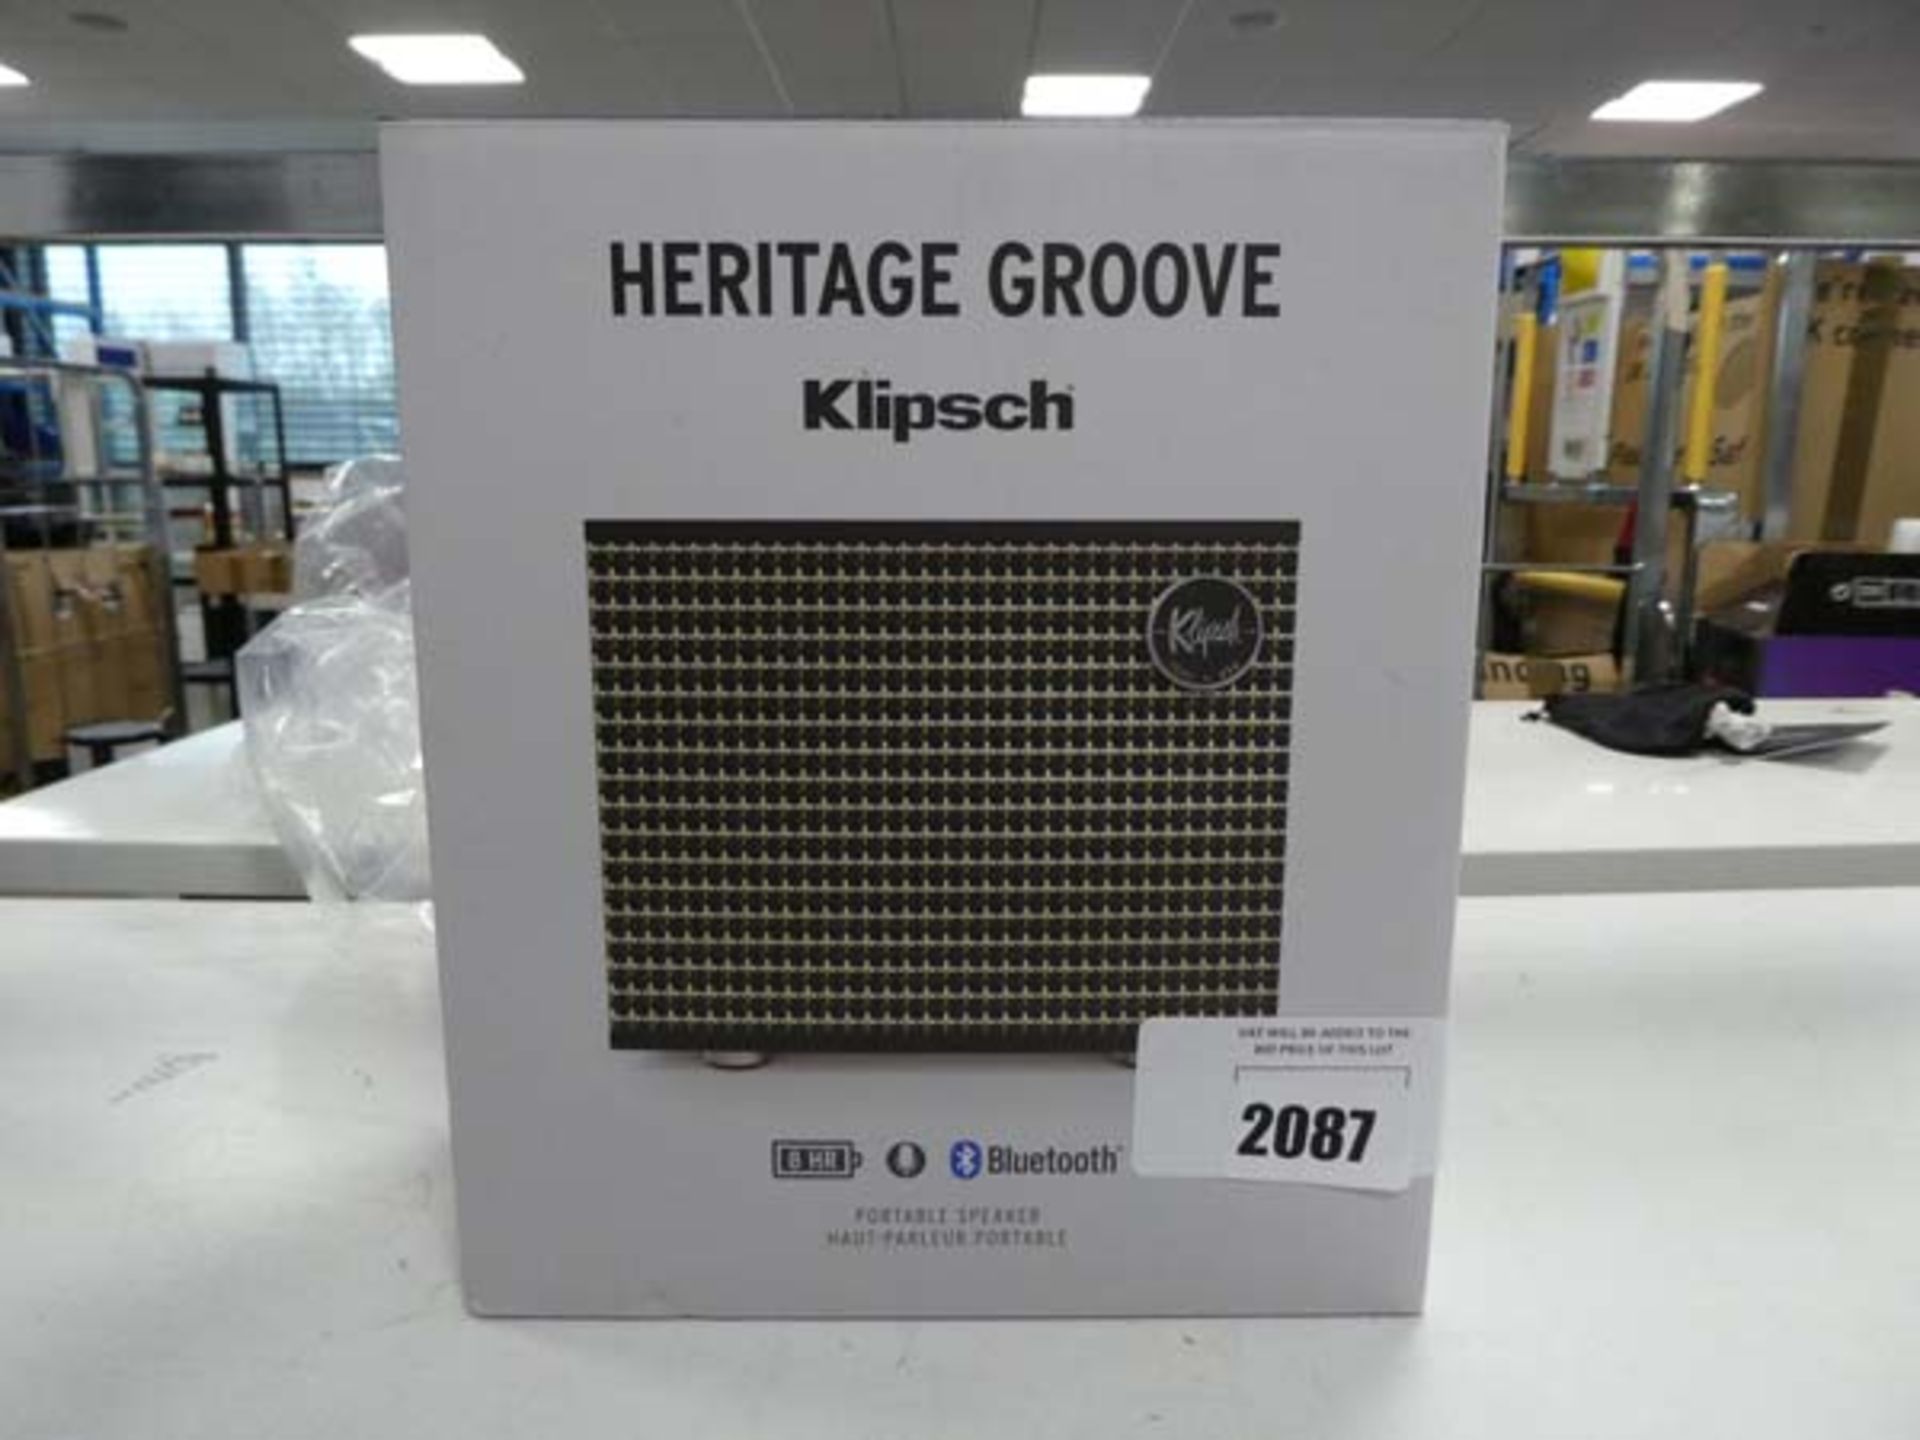 Heritage Groove Klipsch bluetooth speaker with box